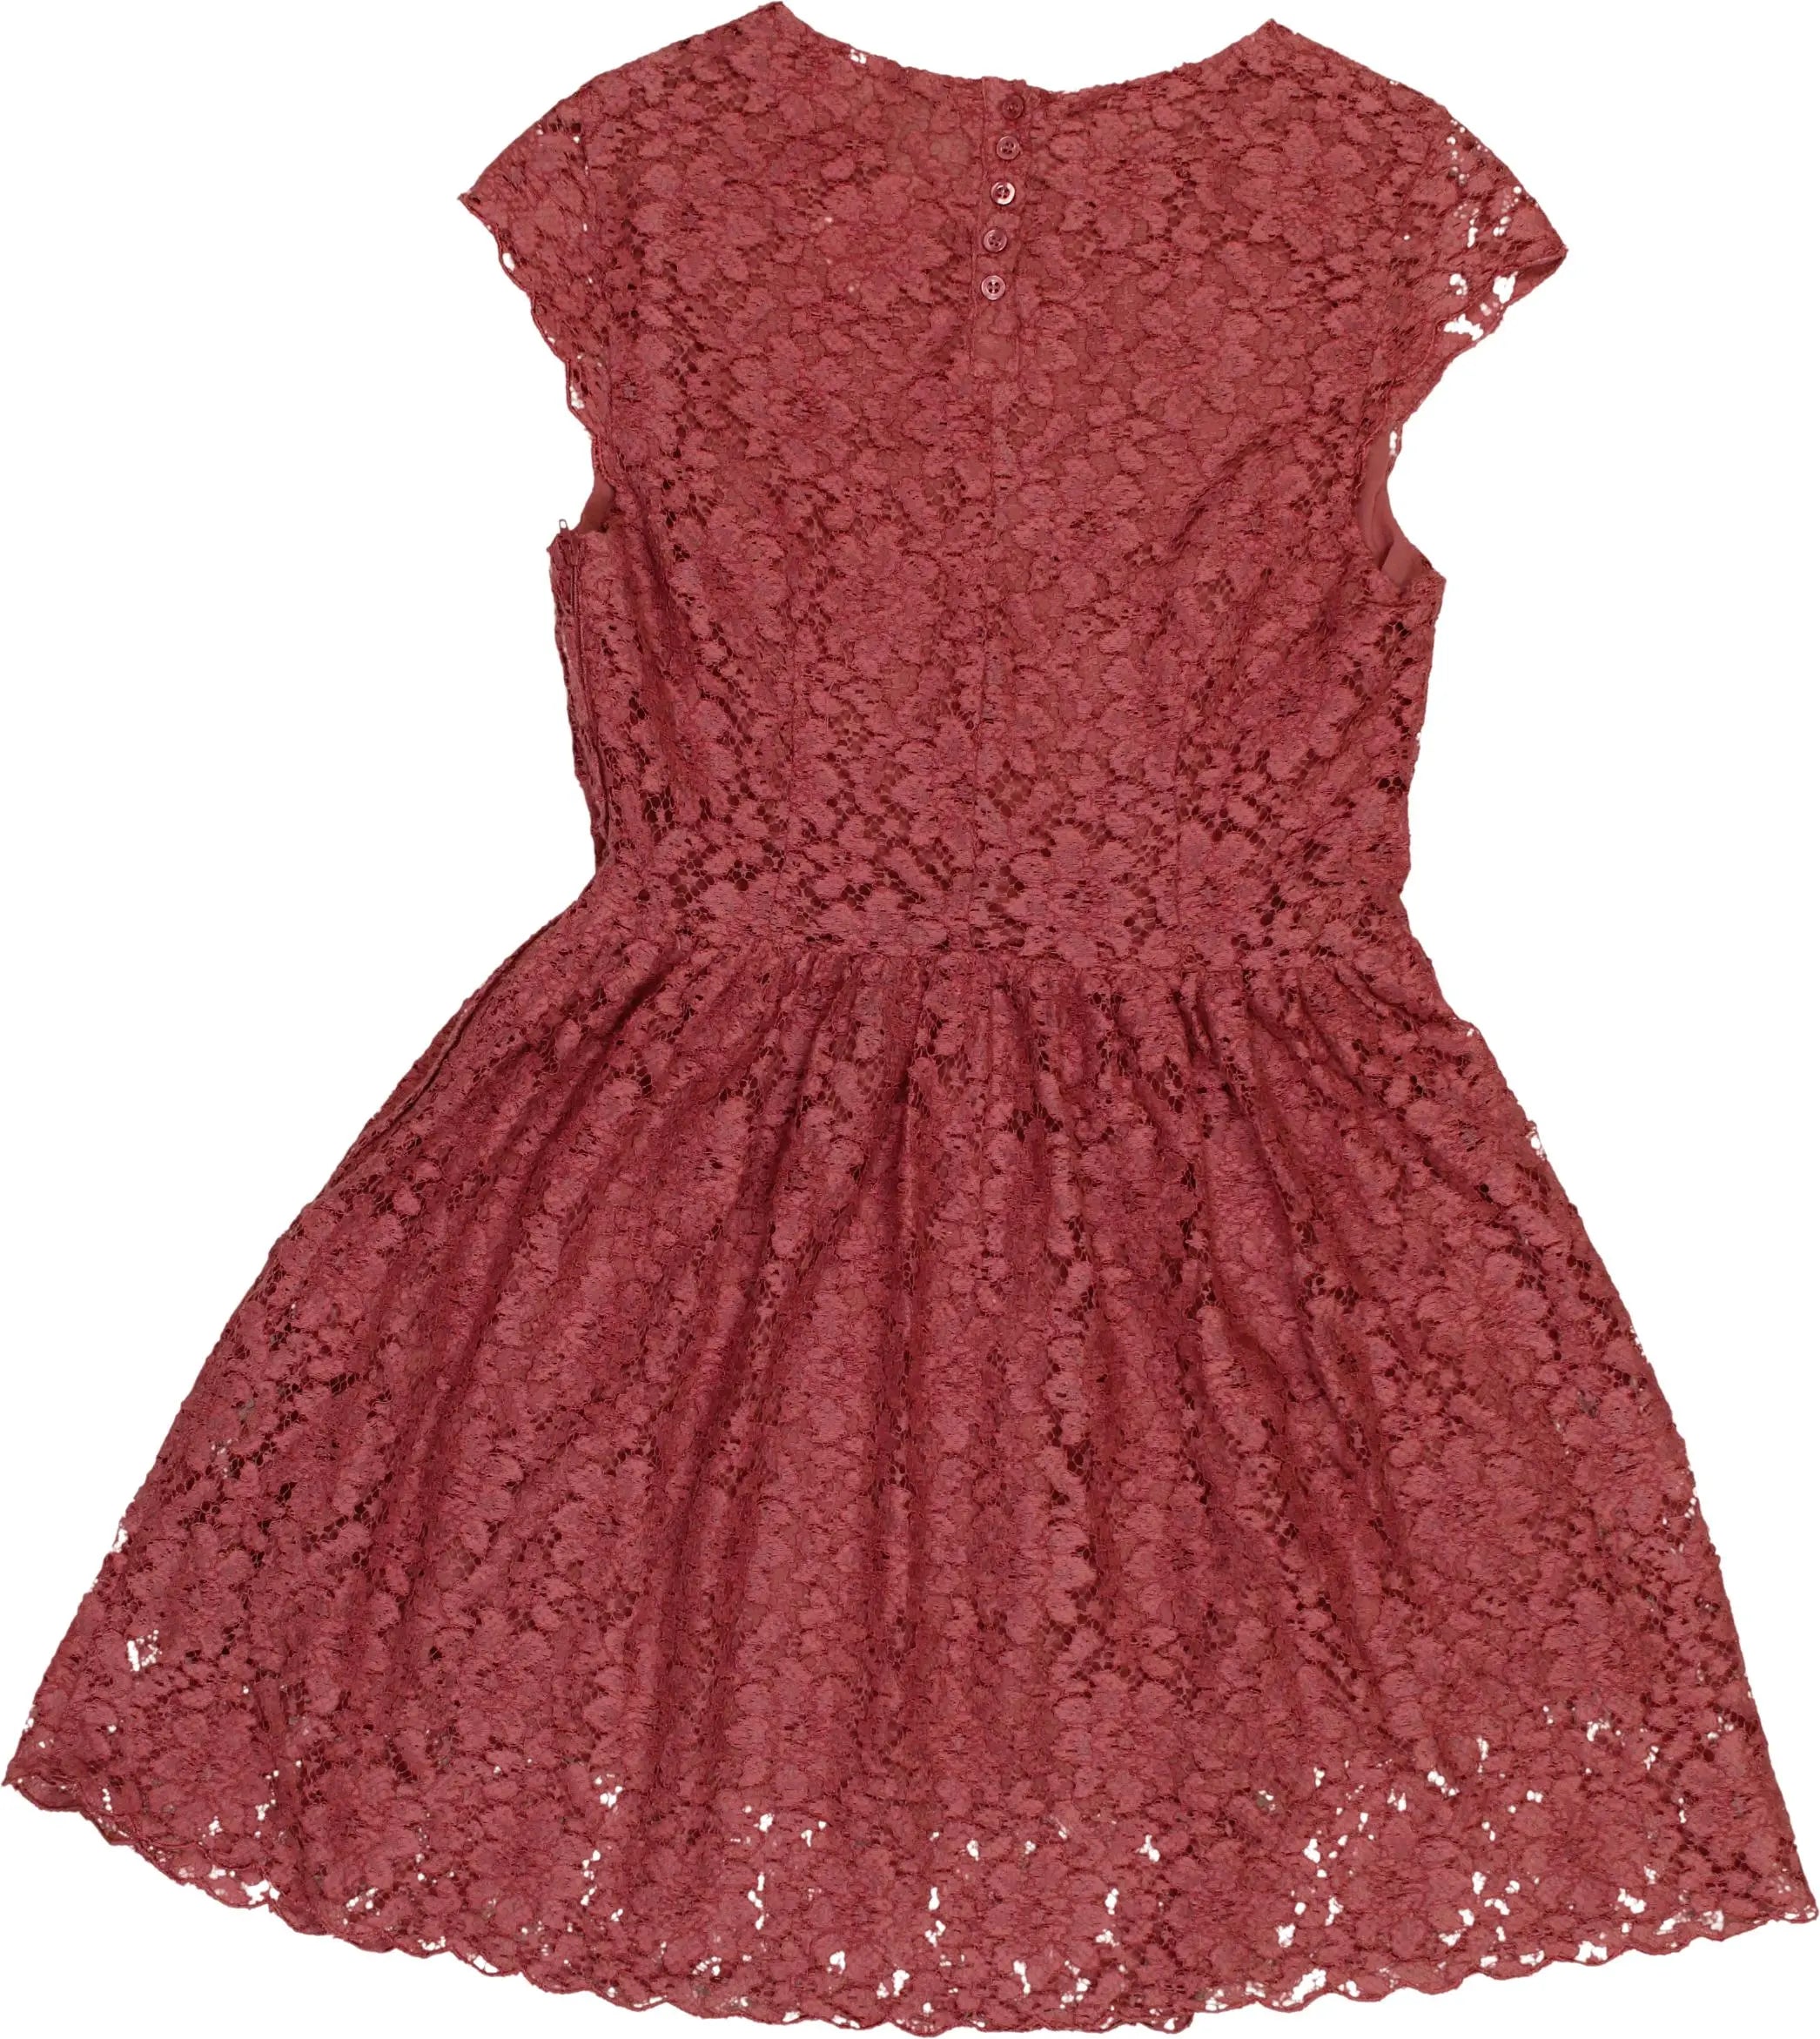 H&M - Mauve Lace Dress- ThriftTale.com - Vintage and second handclothing